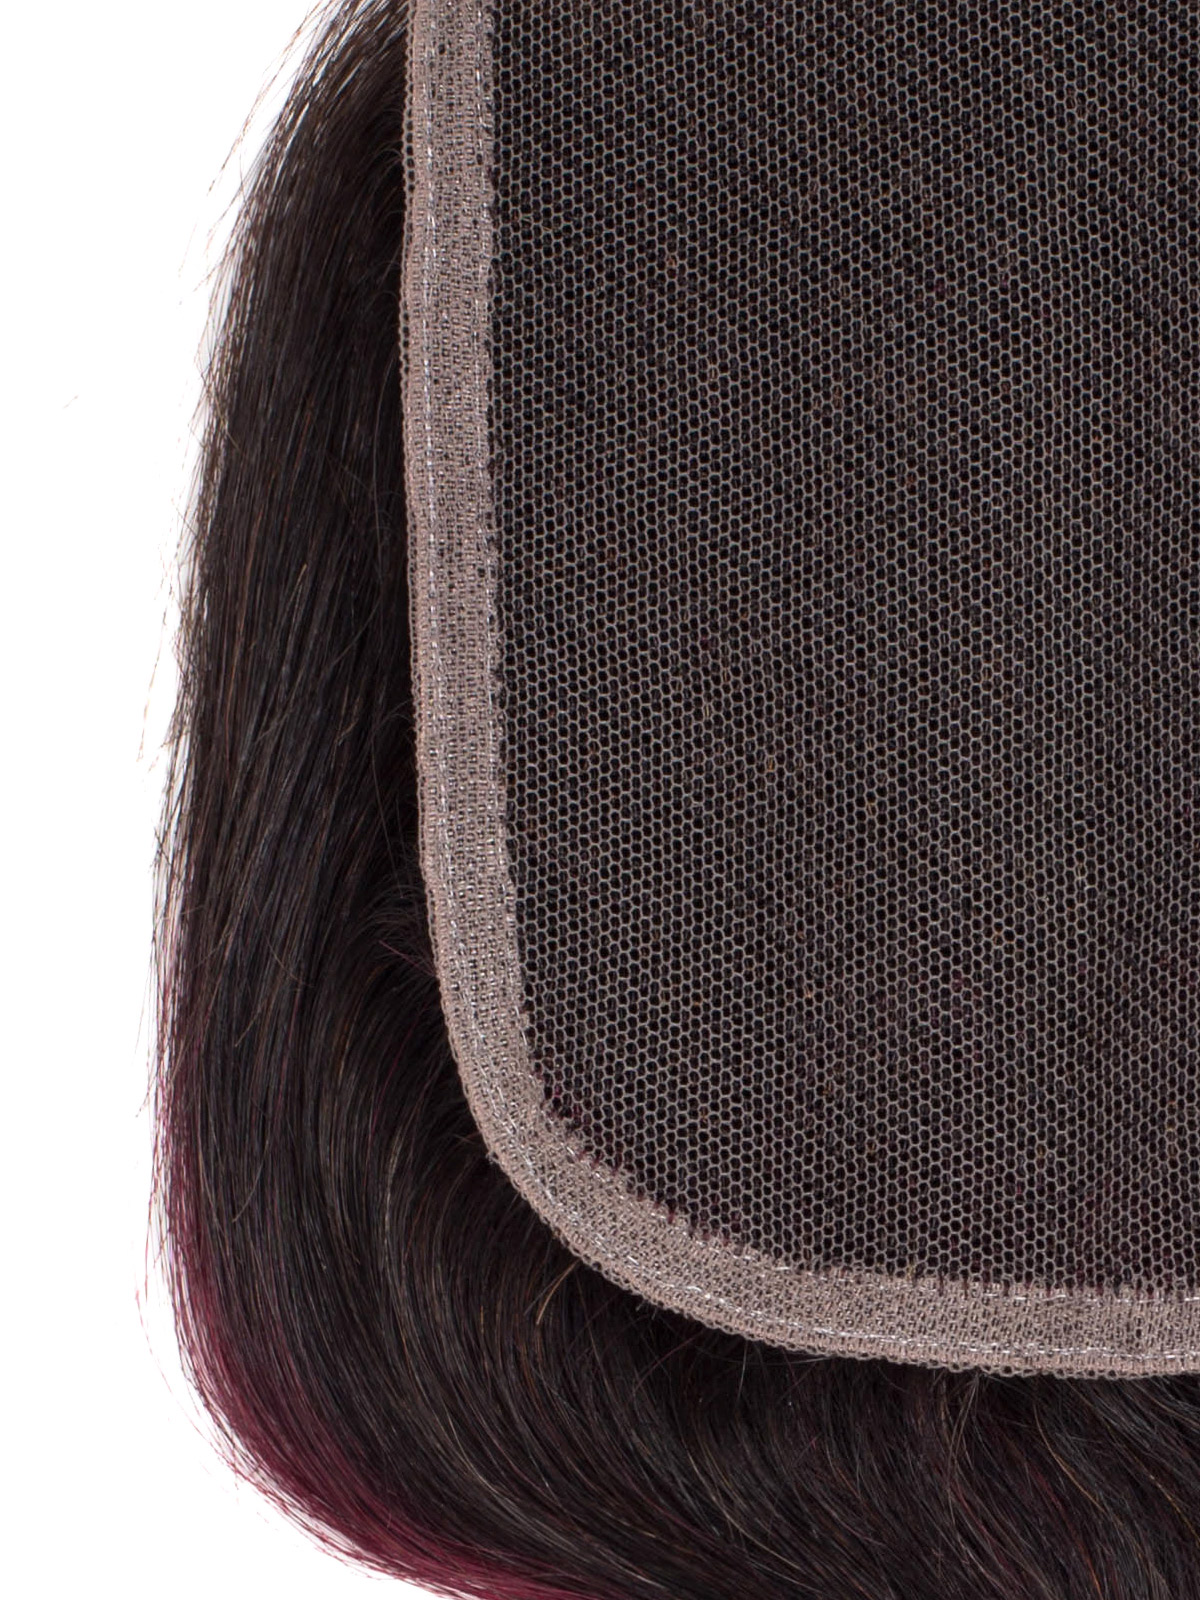 Sahar Essential Virgin Remy Human Hair  Top Lace Closure 4" x 4" (8A) - Body Wave #OT99J 16 inch